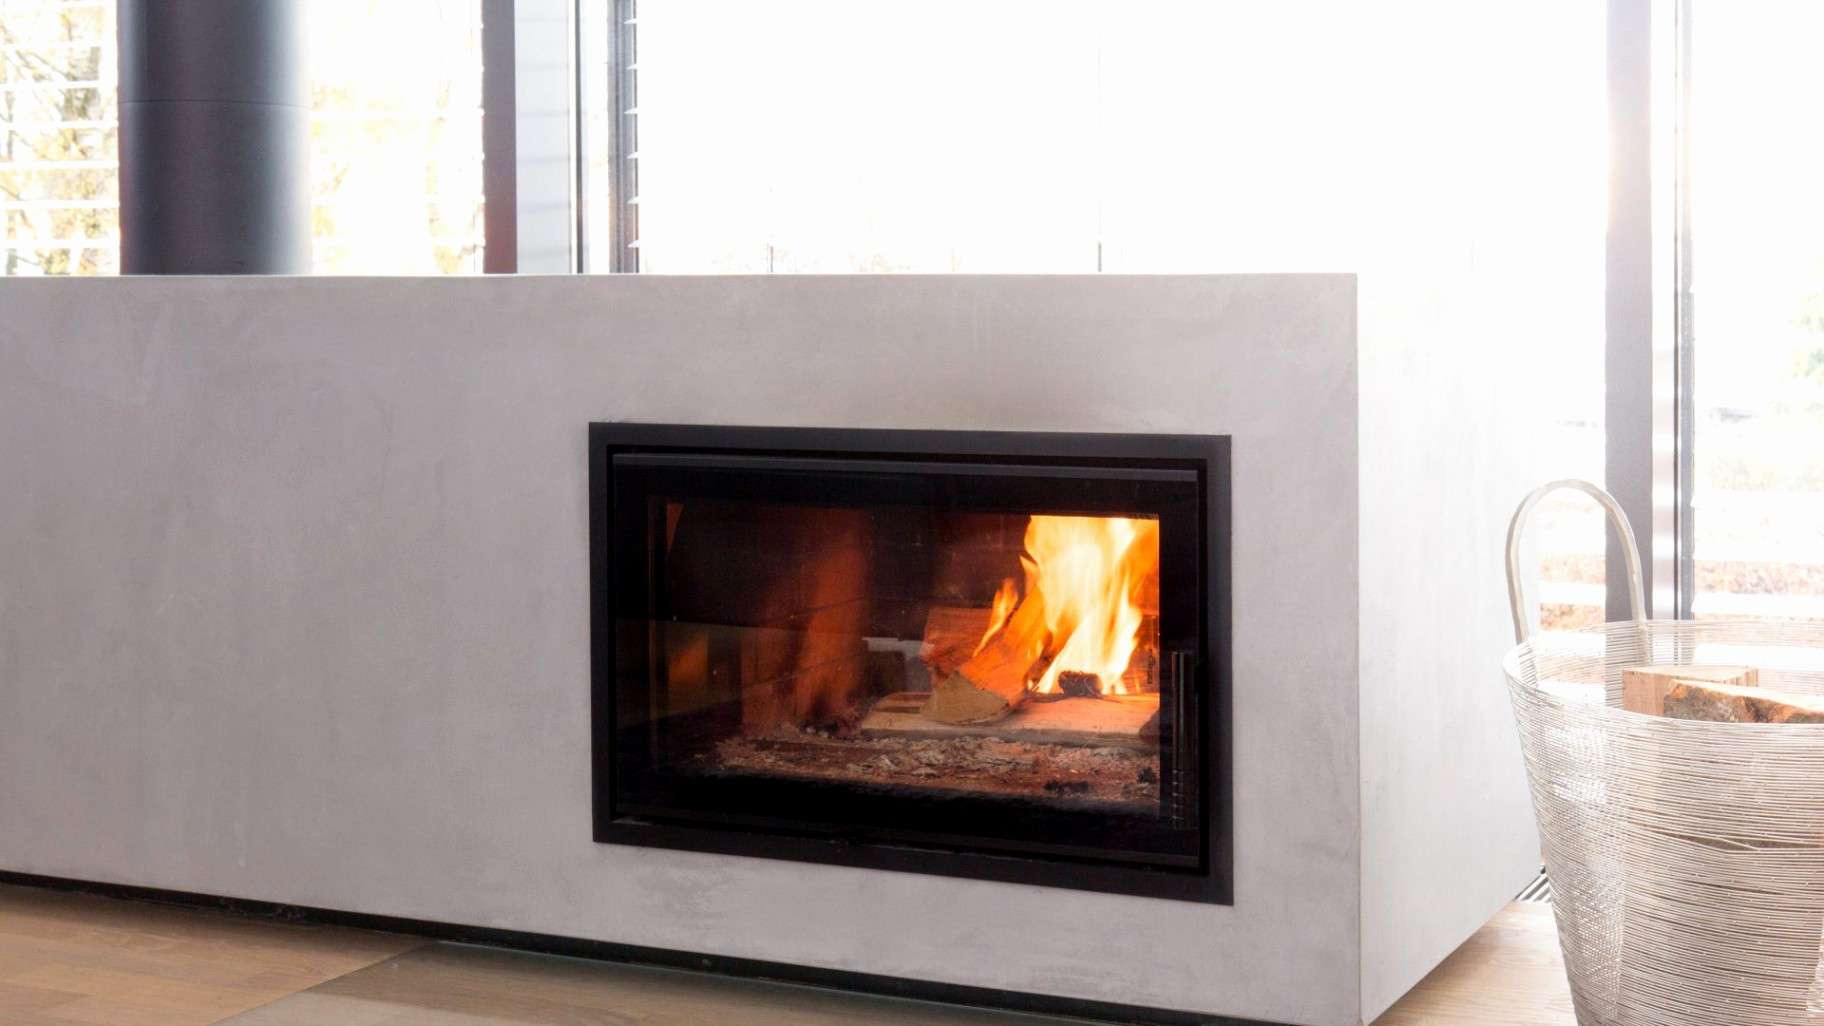 Fireplace topper Unique Terrassenkamin Mit Grill 42 Inspiration